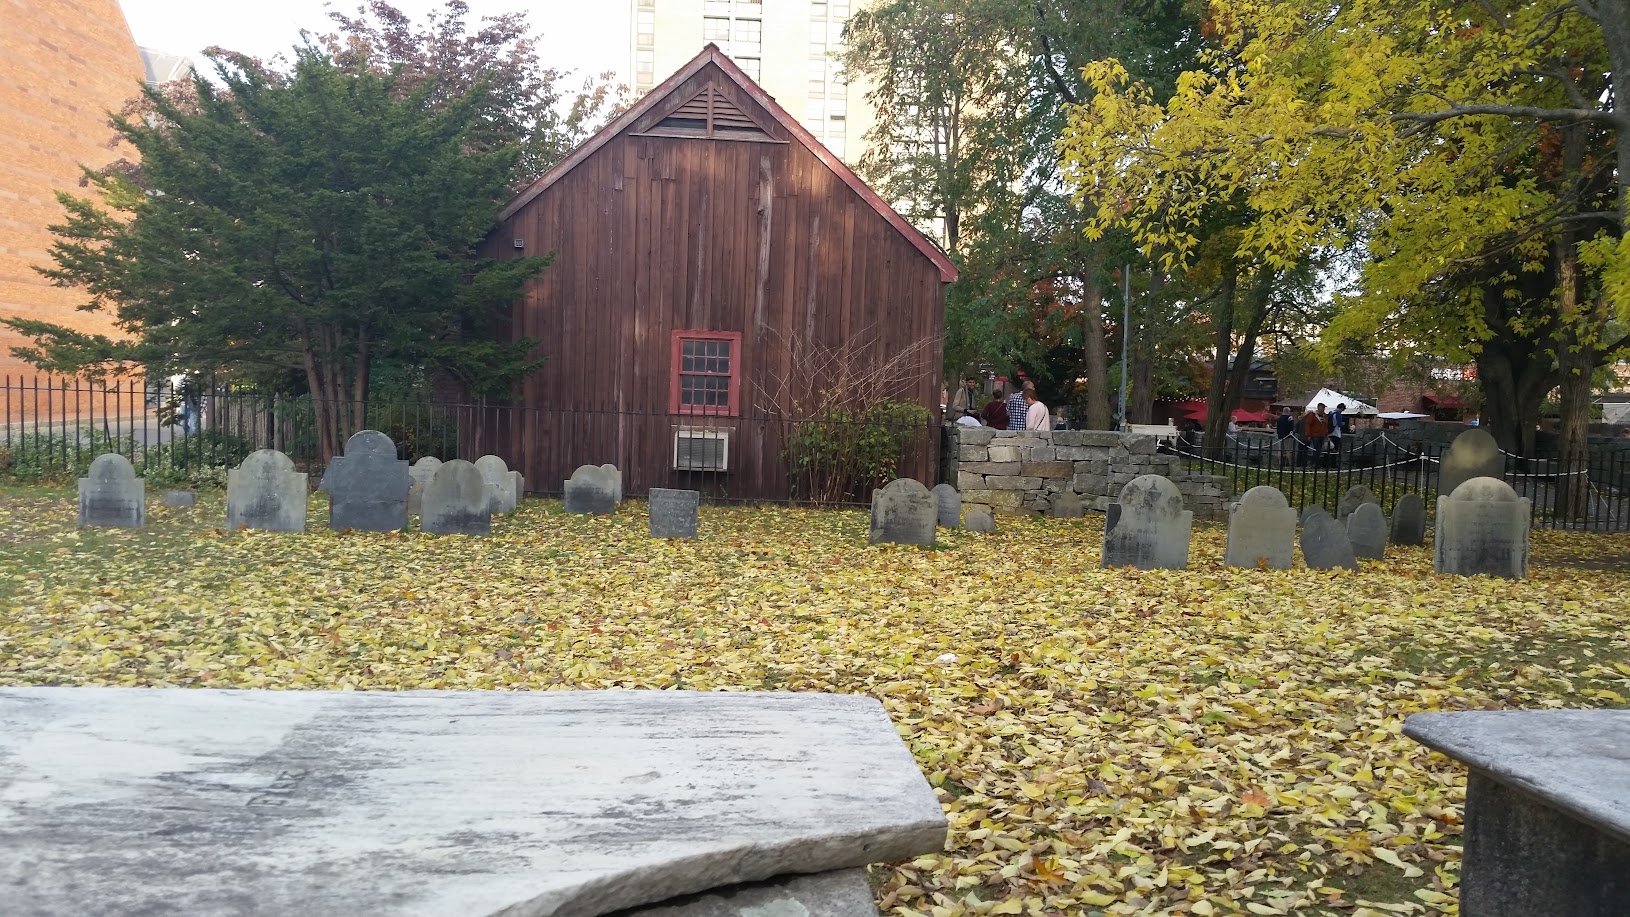 Salem Witch Trials Memorial